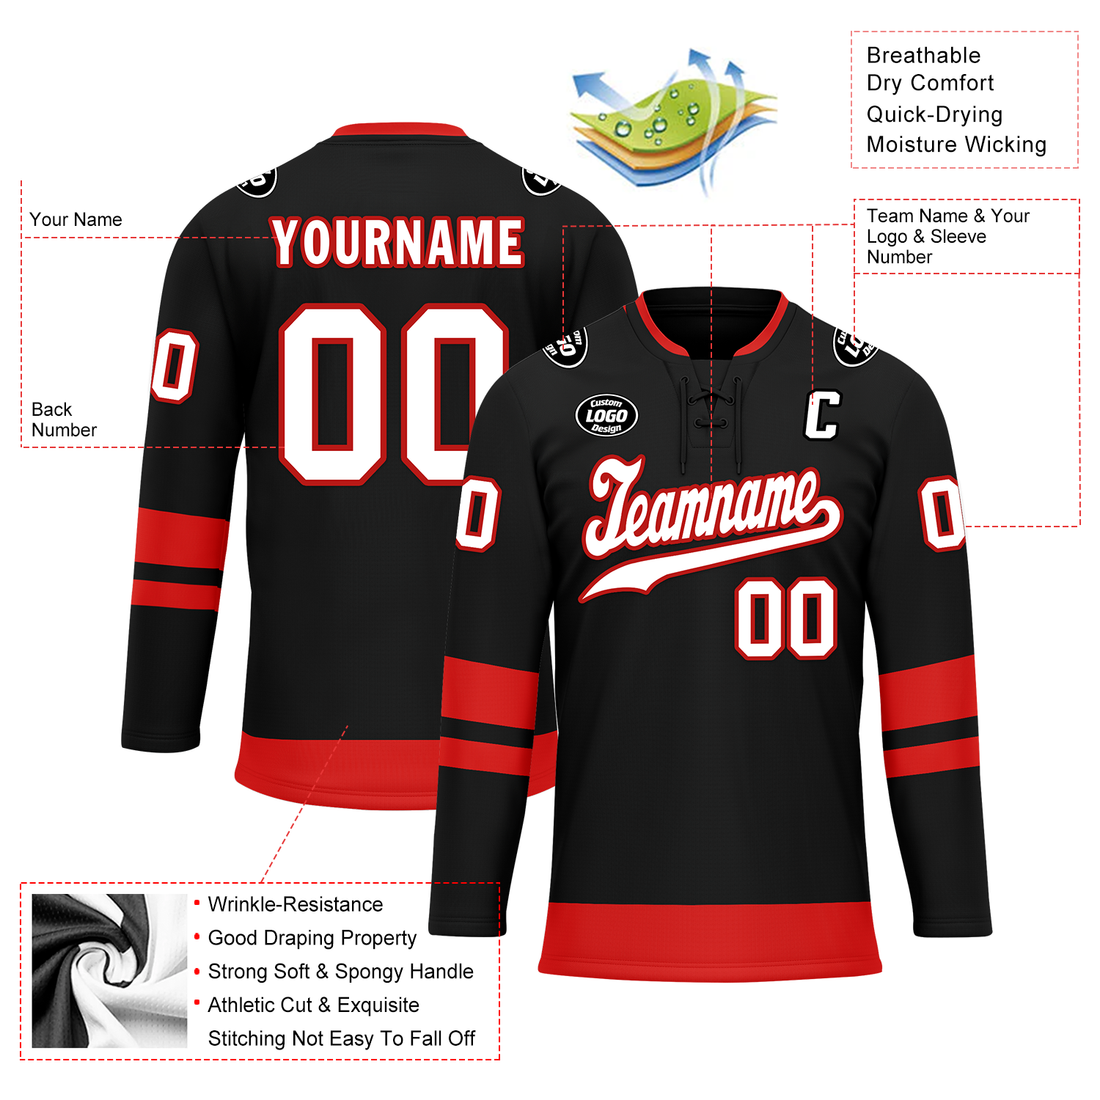 Custom Black Red Personalized Hockey Jersey HCKJ01-D0a700b